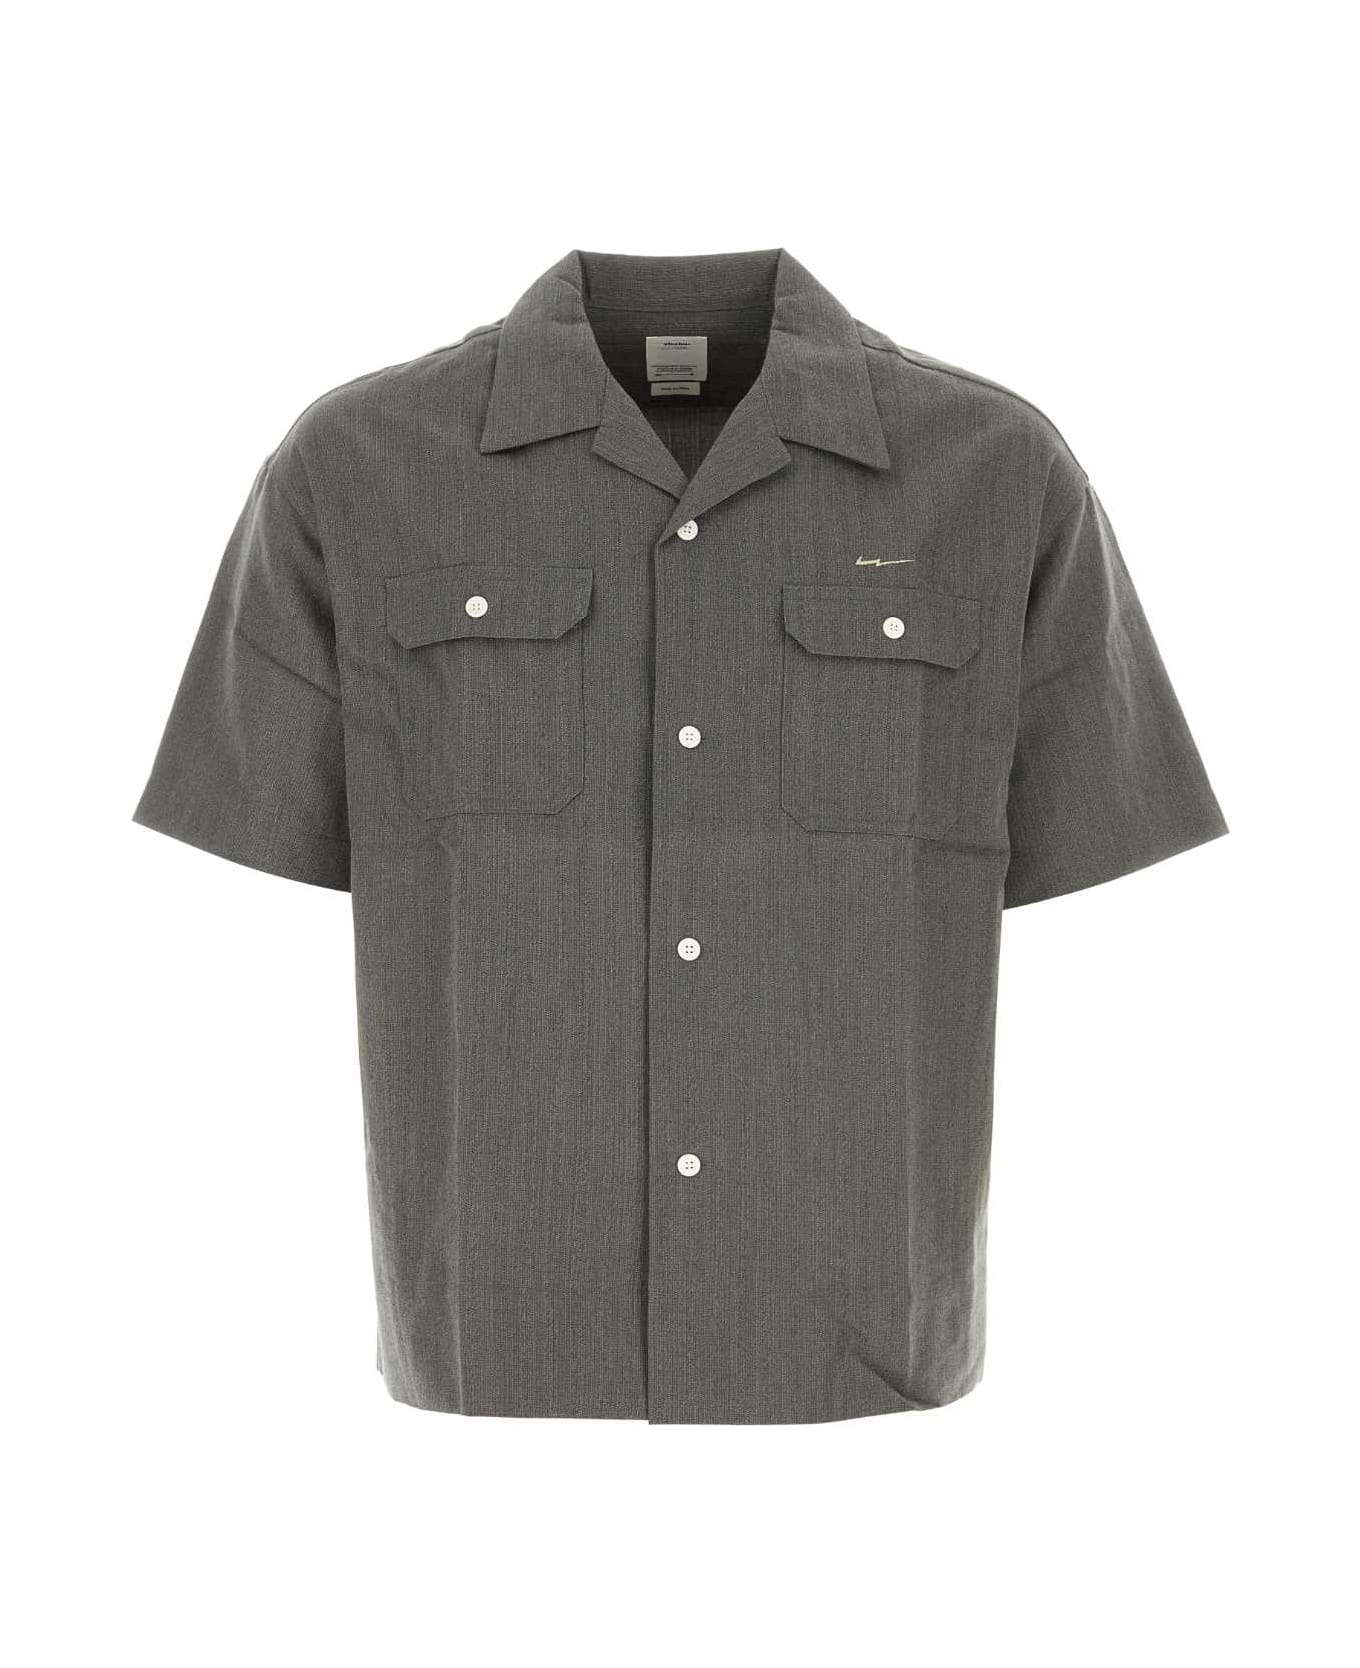 Visvim Grey Wool Blend Caban Work Shirt - GREY